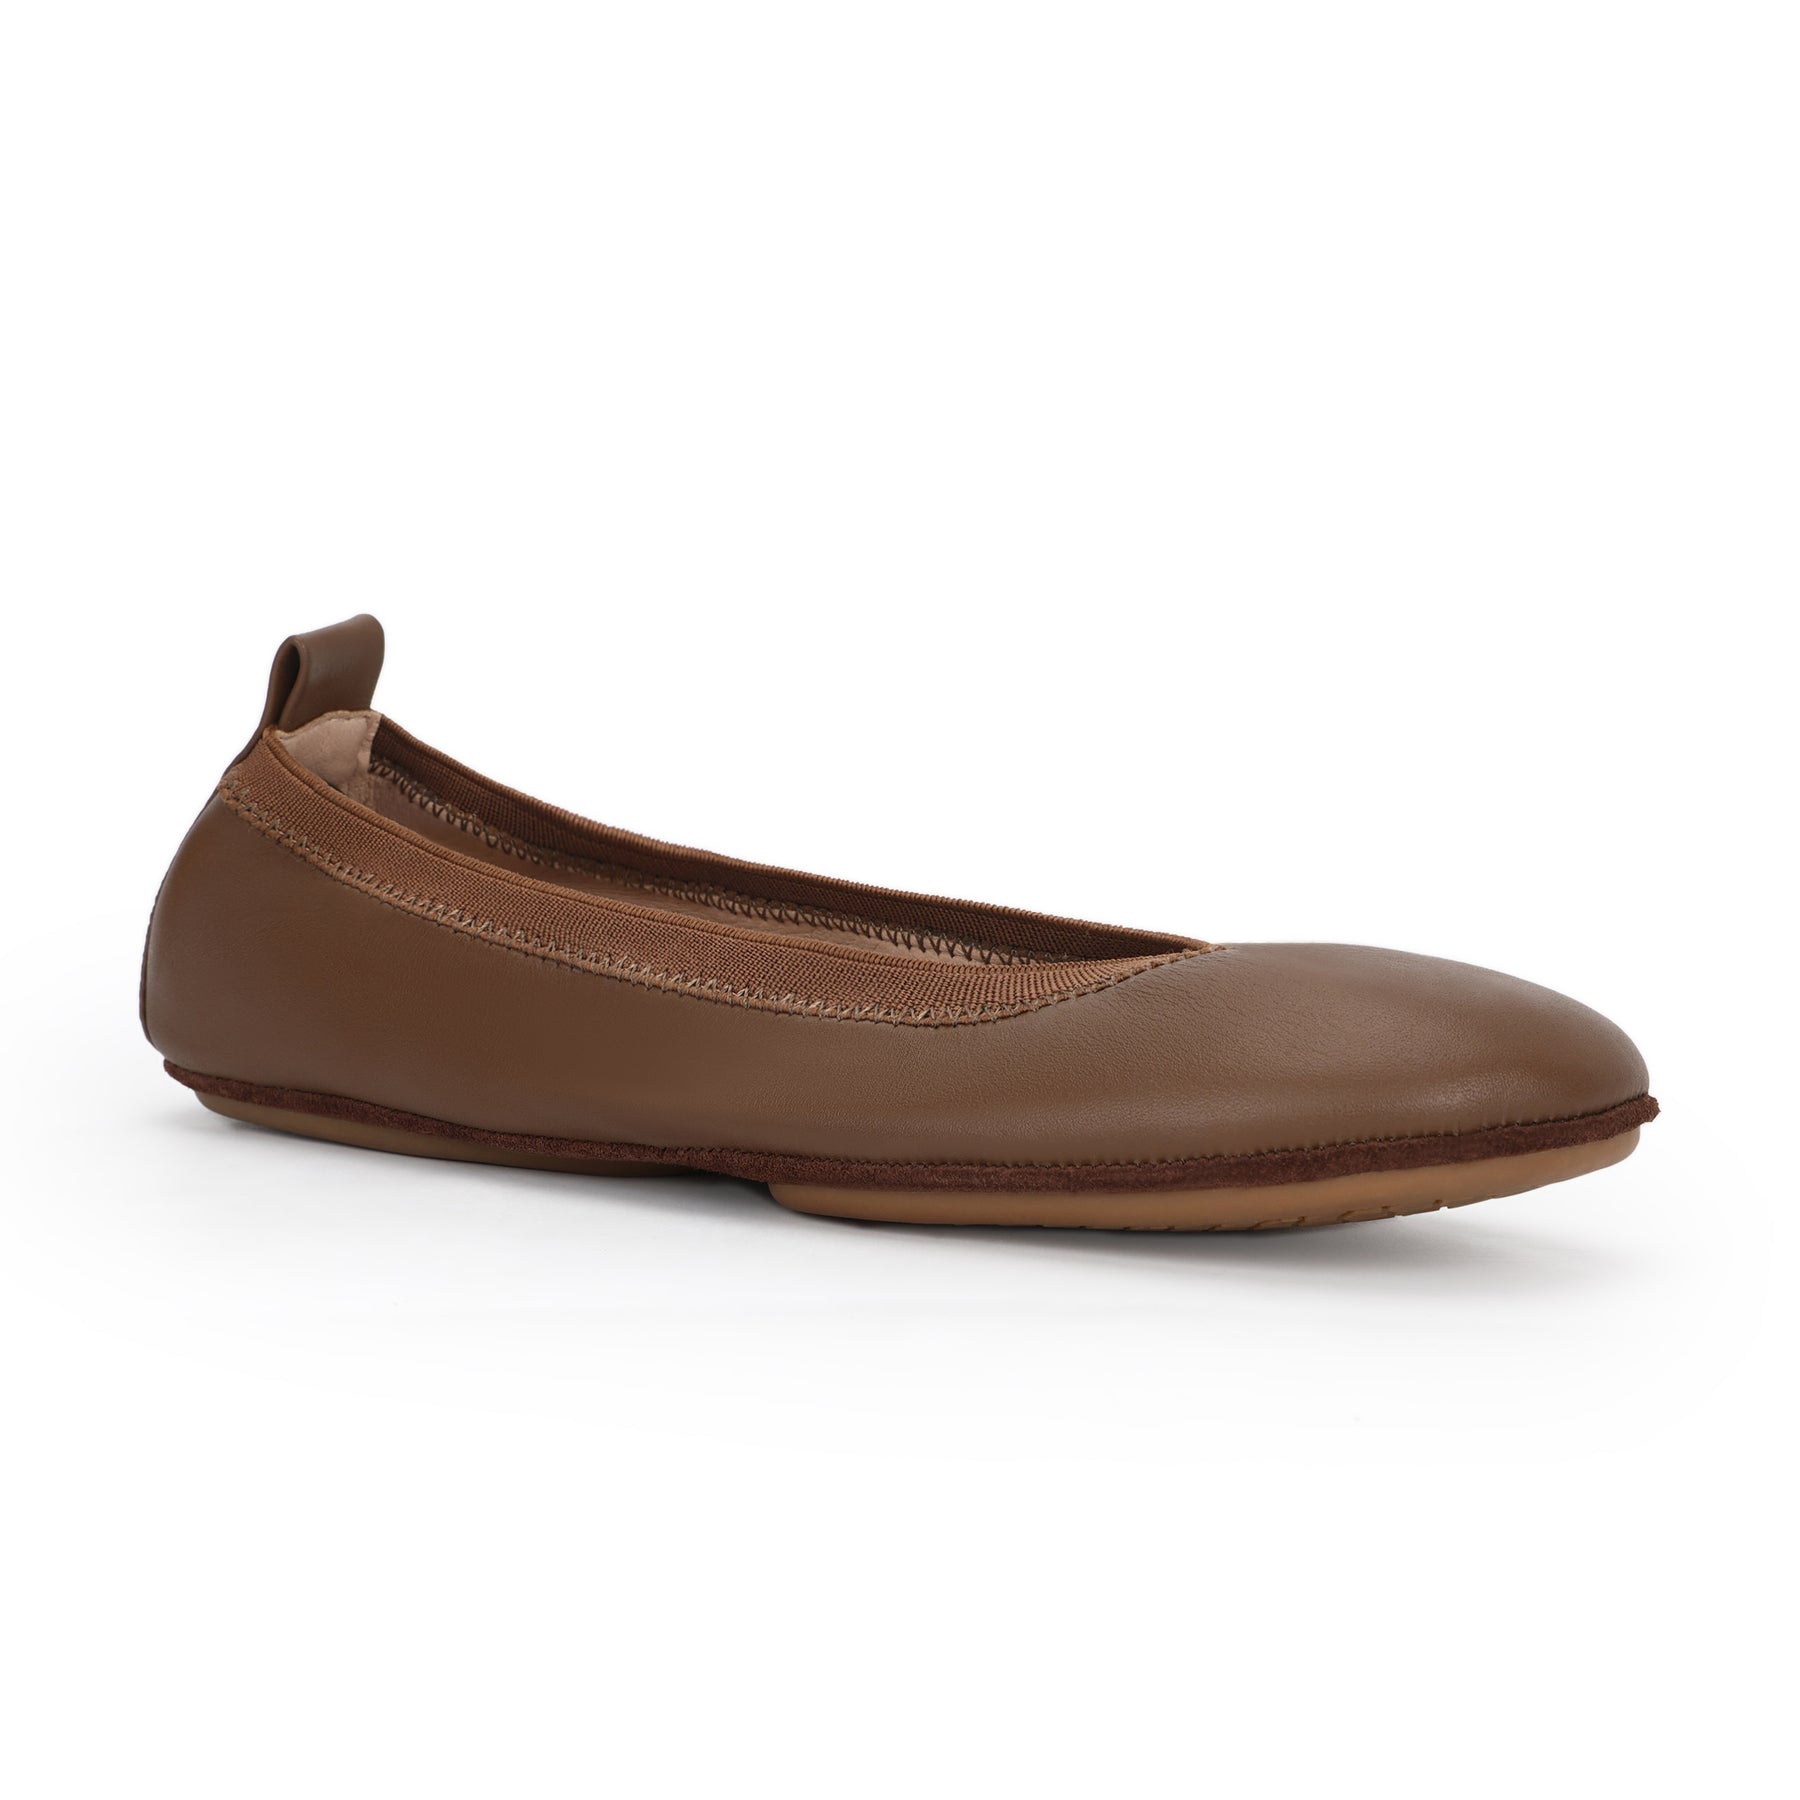 Samara Foldable Ballet Flat in Chocolate Brown Leather